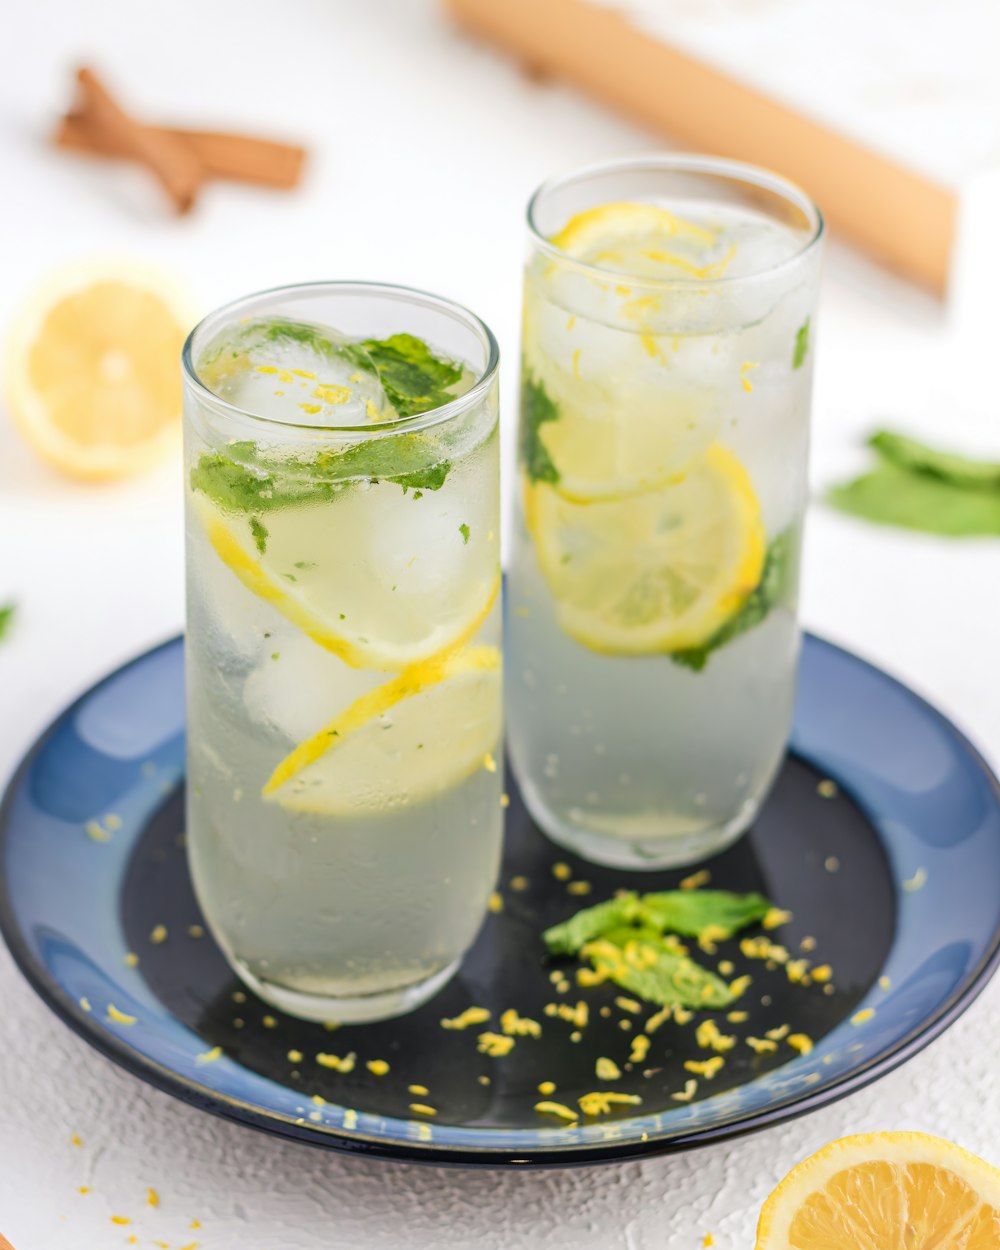 two glasses of lemonade on a blue plate